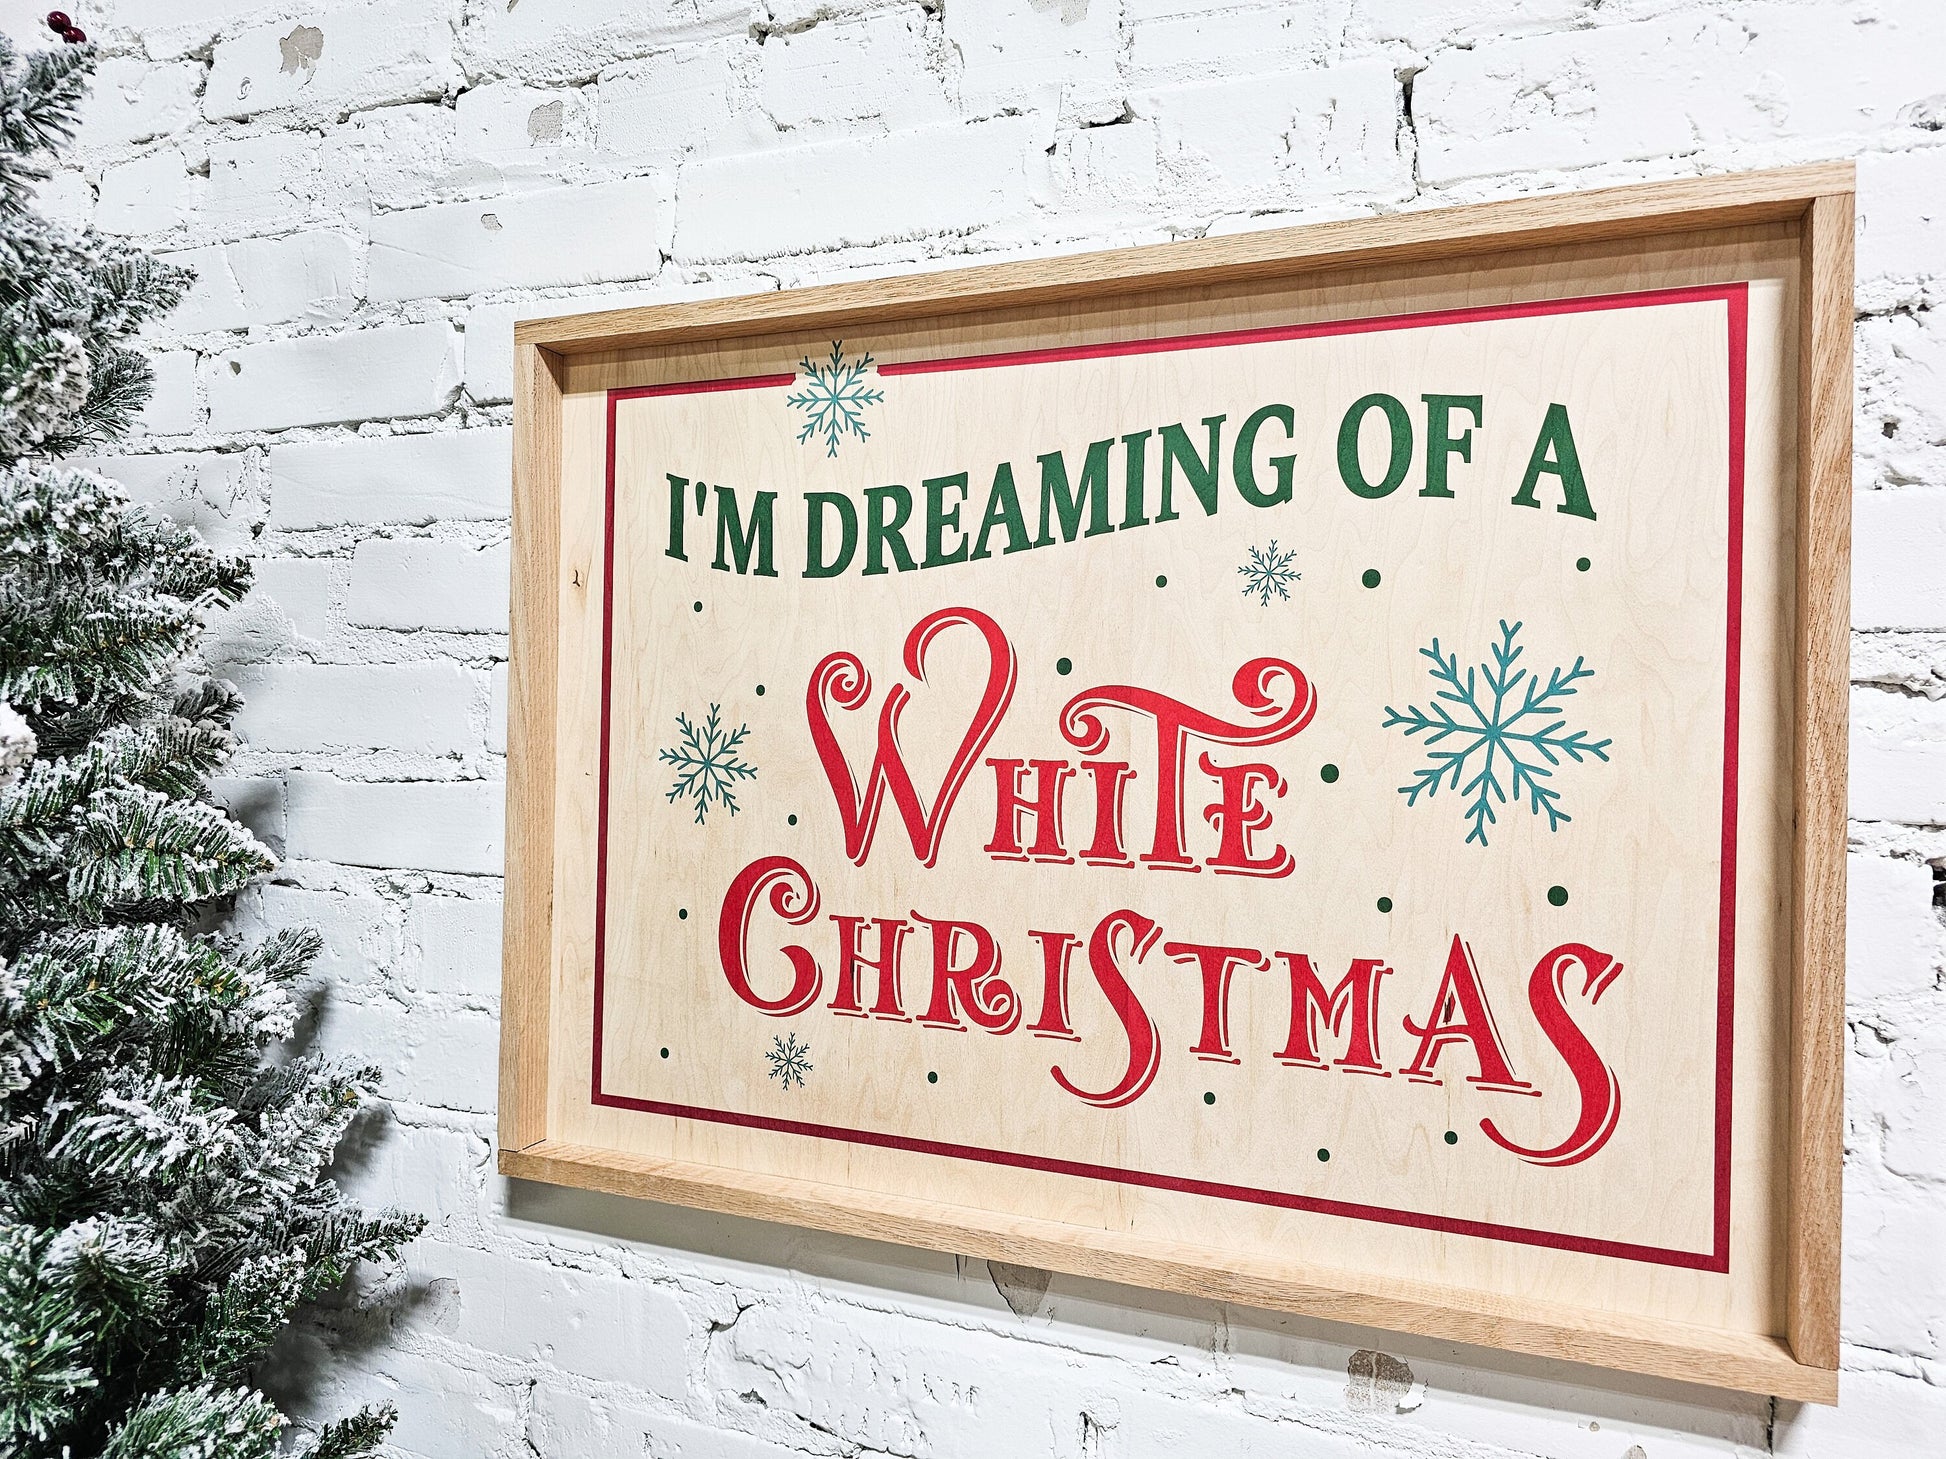 I'm Dreaming of Some White Christmas Houses - Loving Here